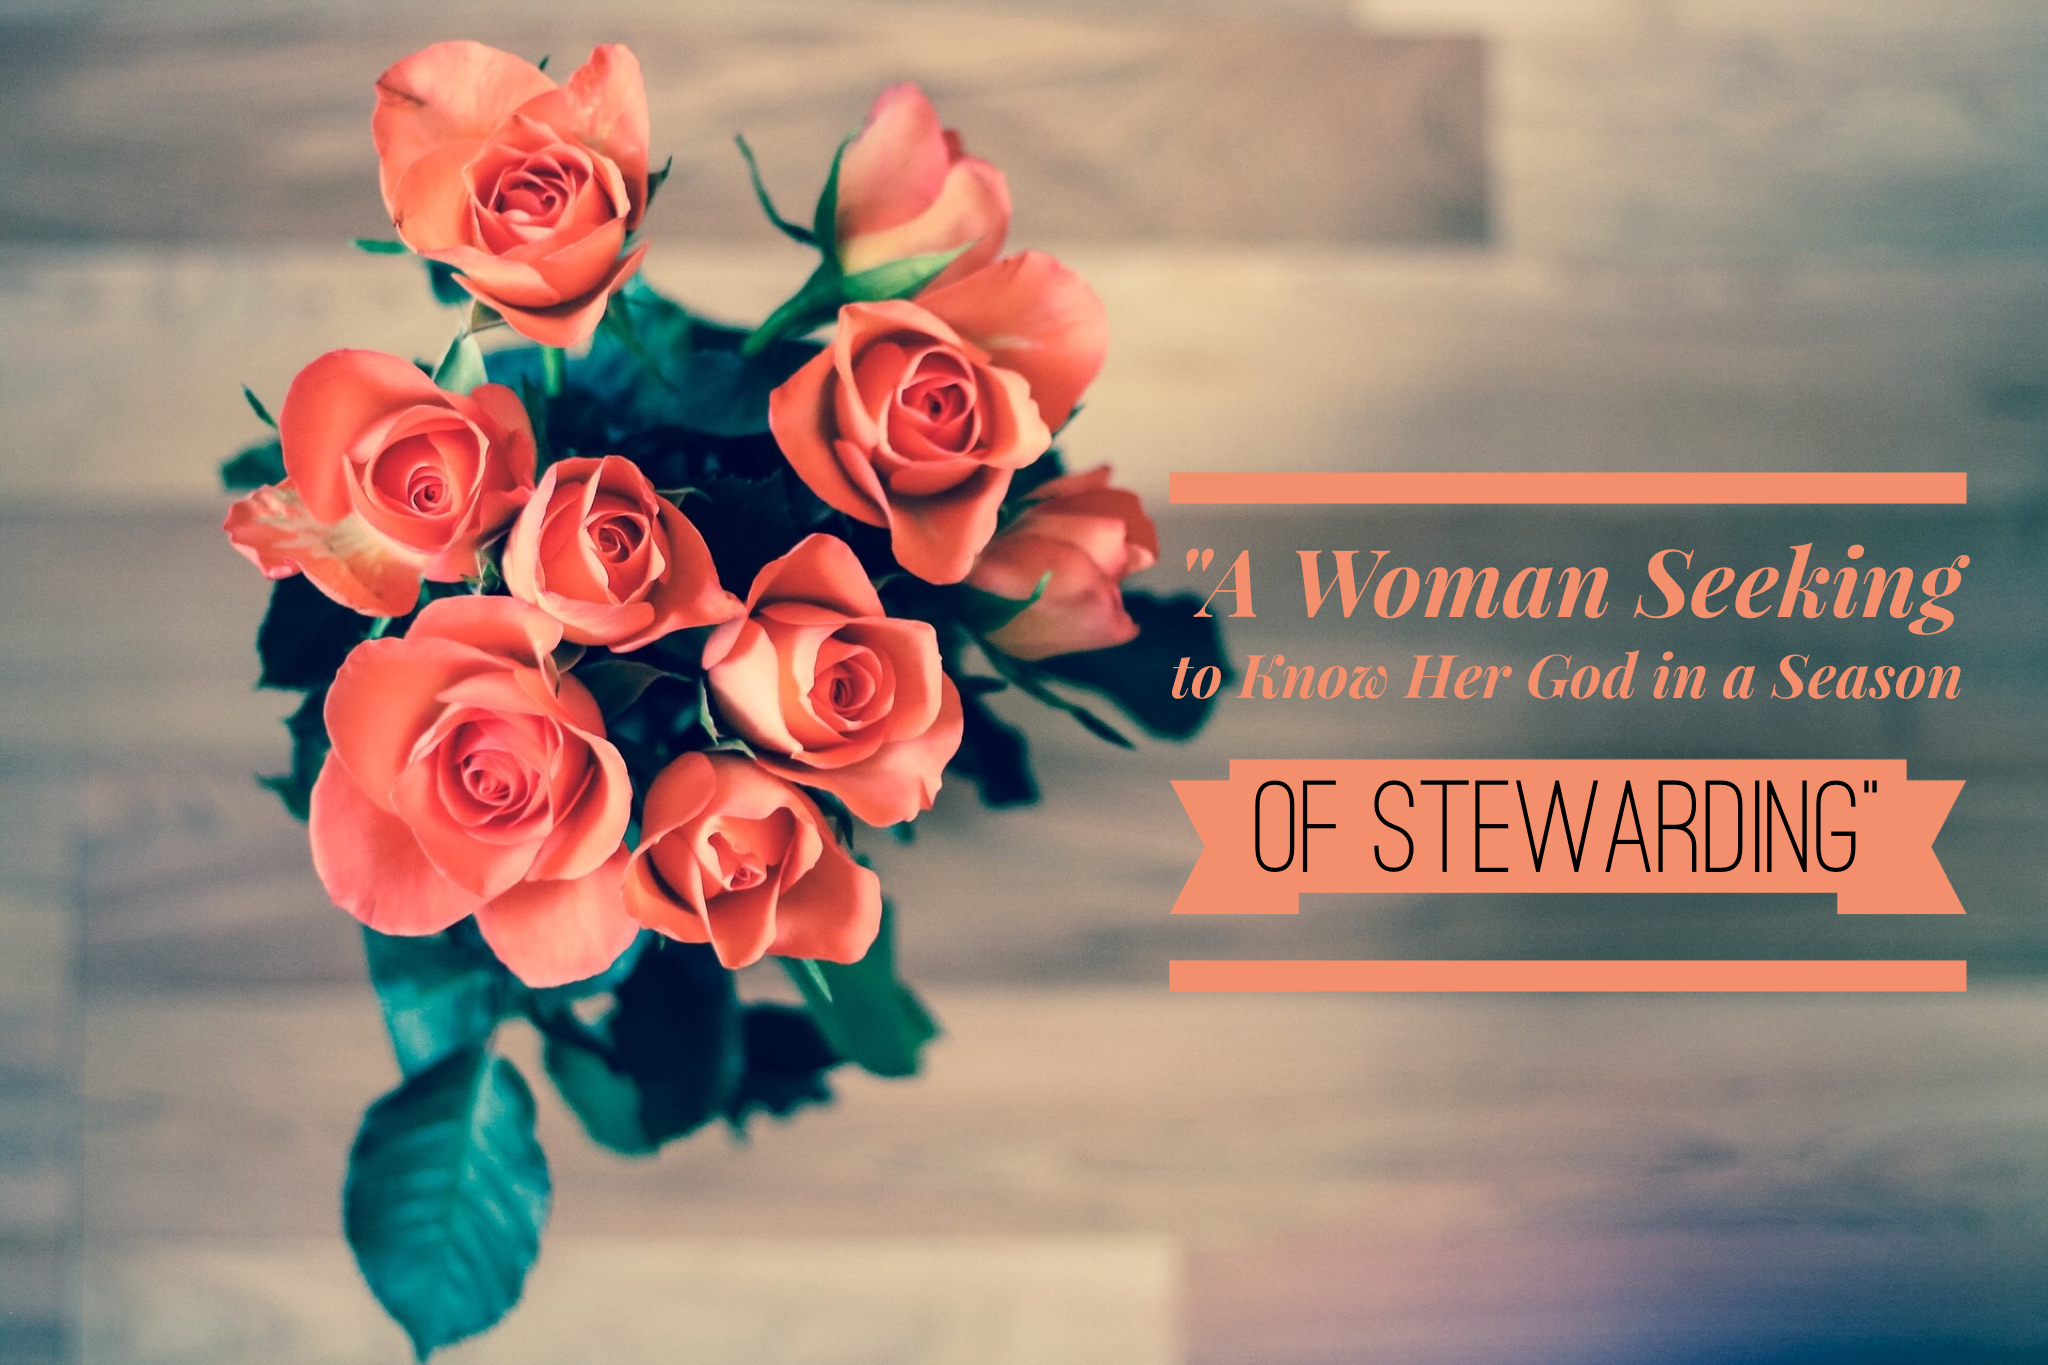 A Woman Seeking to Know Her God in a Season of Stewarding | www.codyandras.com/2017/9/6/a-woman-seeking-to-know-her-god-in-a-season-of-stewarding